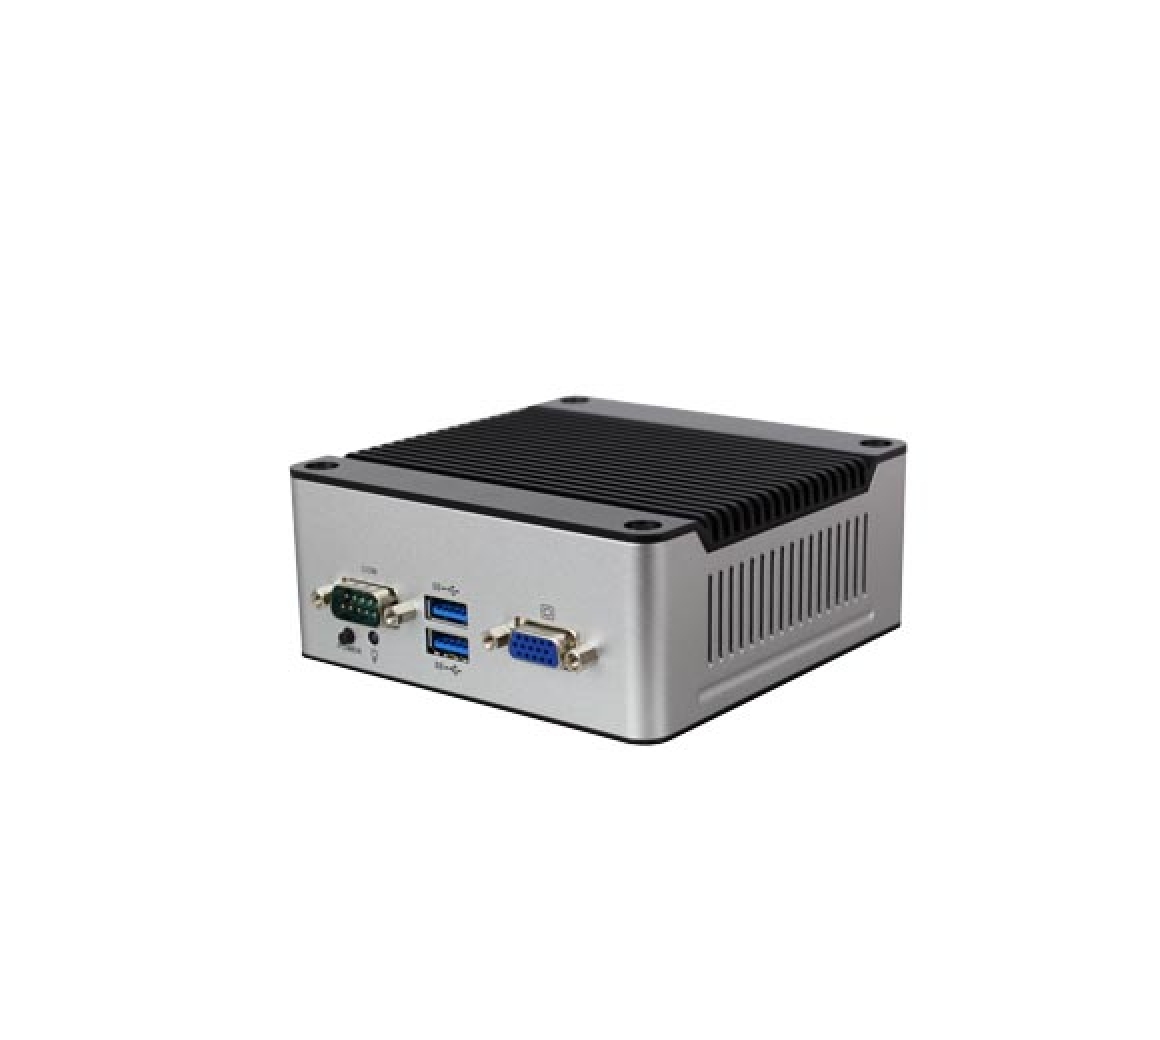 EBOX-ALN Apollo Lake Embedded Server